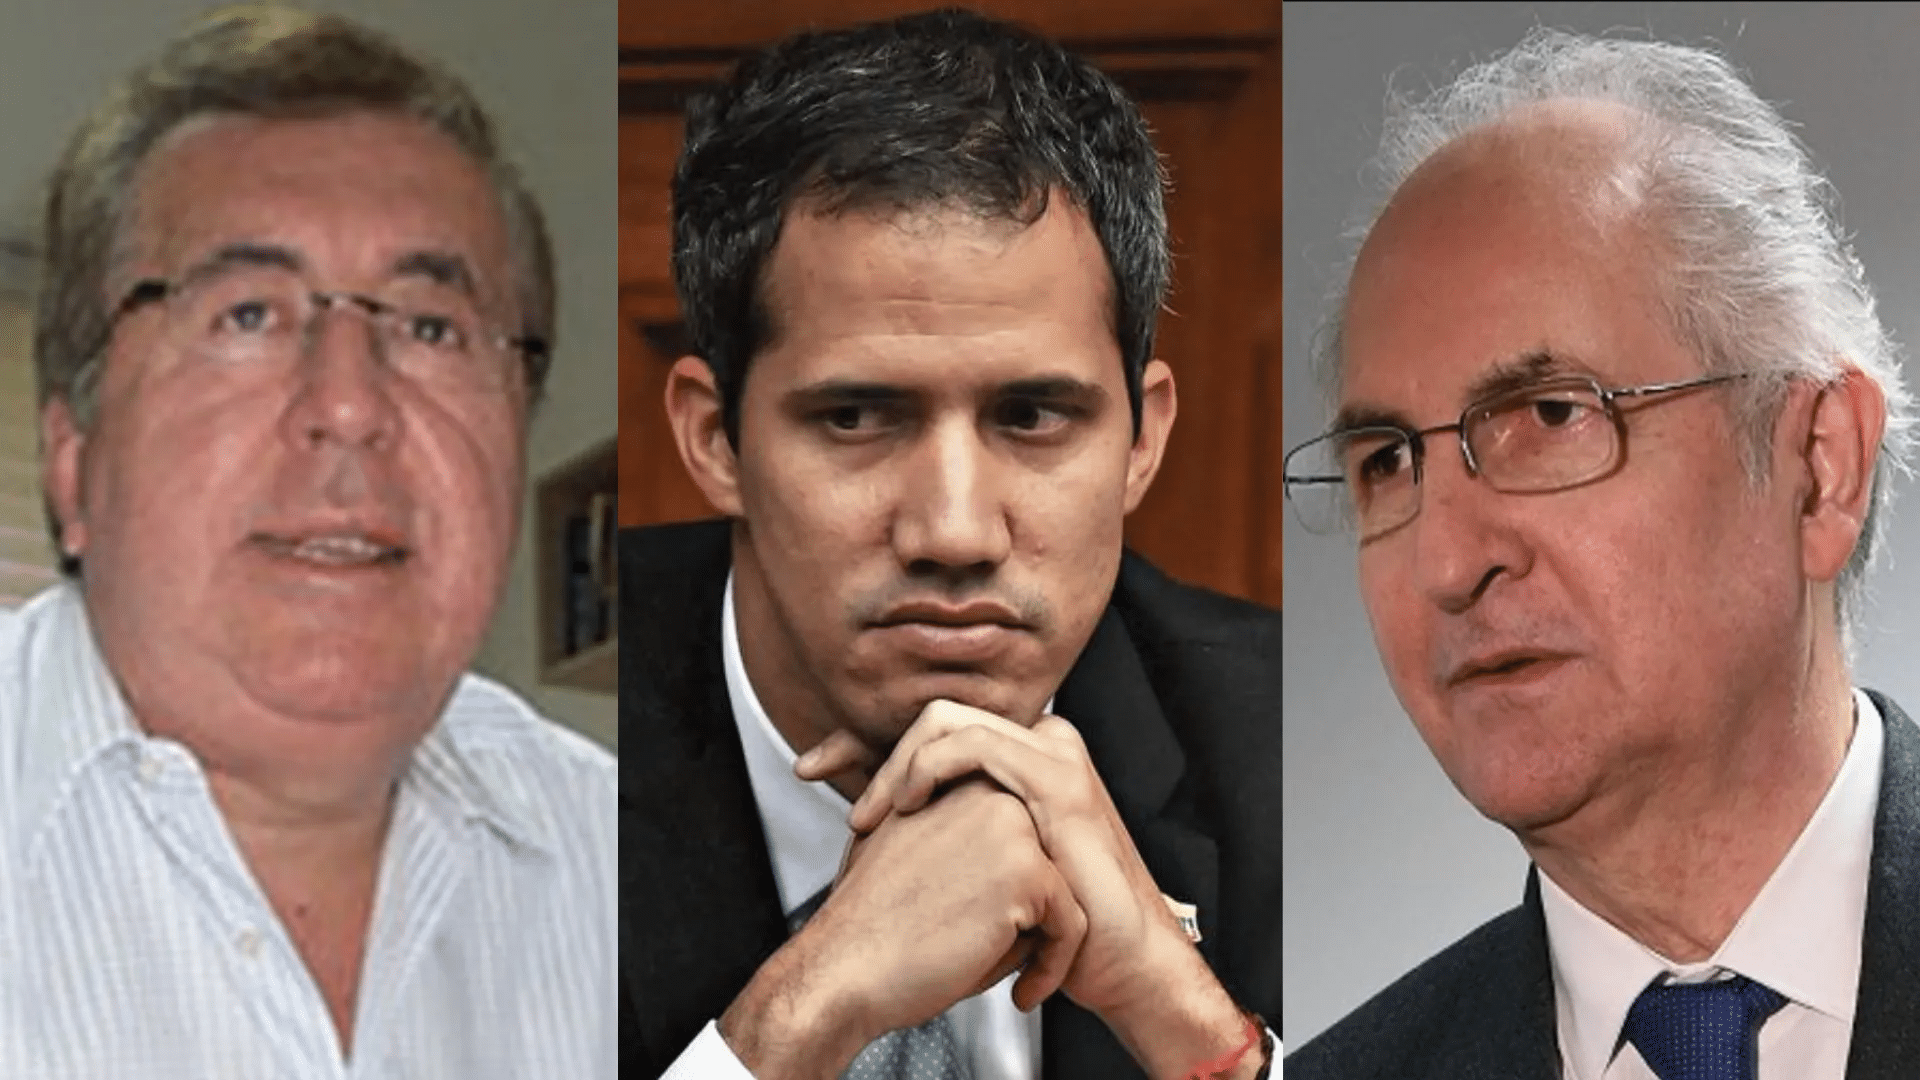 Featured image: César Pérez Vivas (left), Juan Guaidó (center), and Antonio Ledezma (right), three representatives of the Venezuelan extreme right. Photo: RedRadioVE